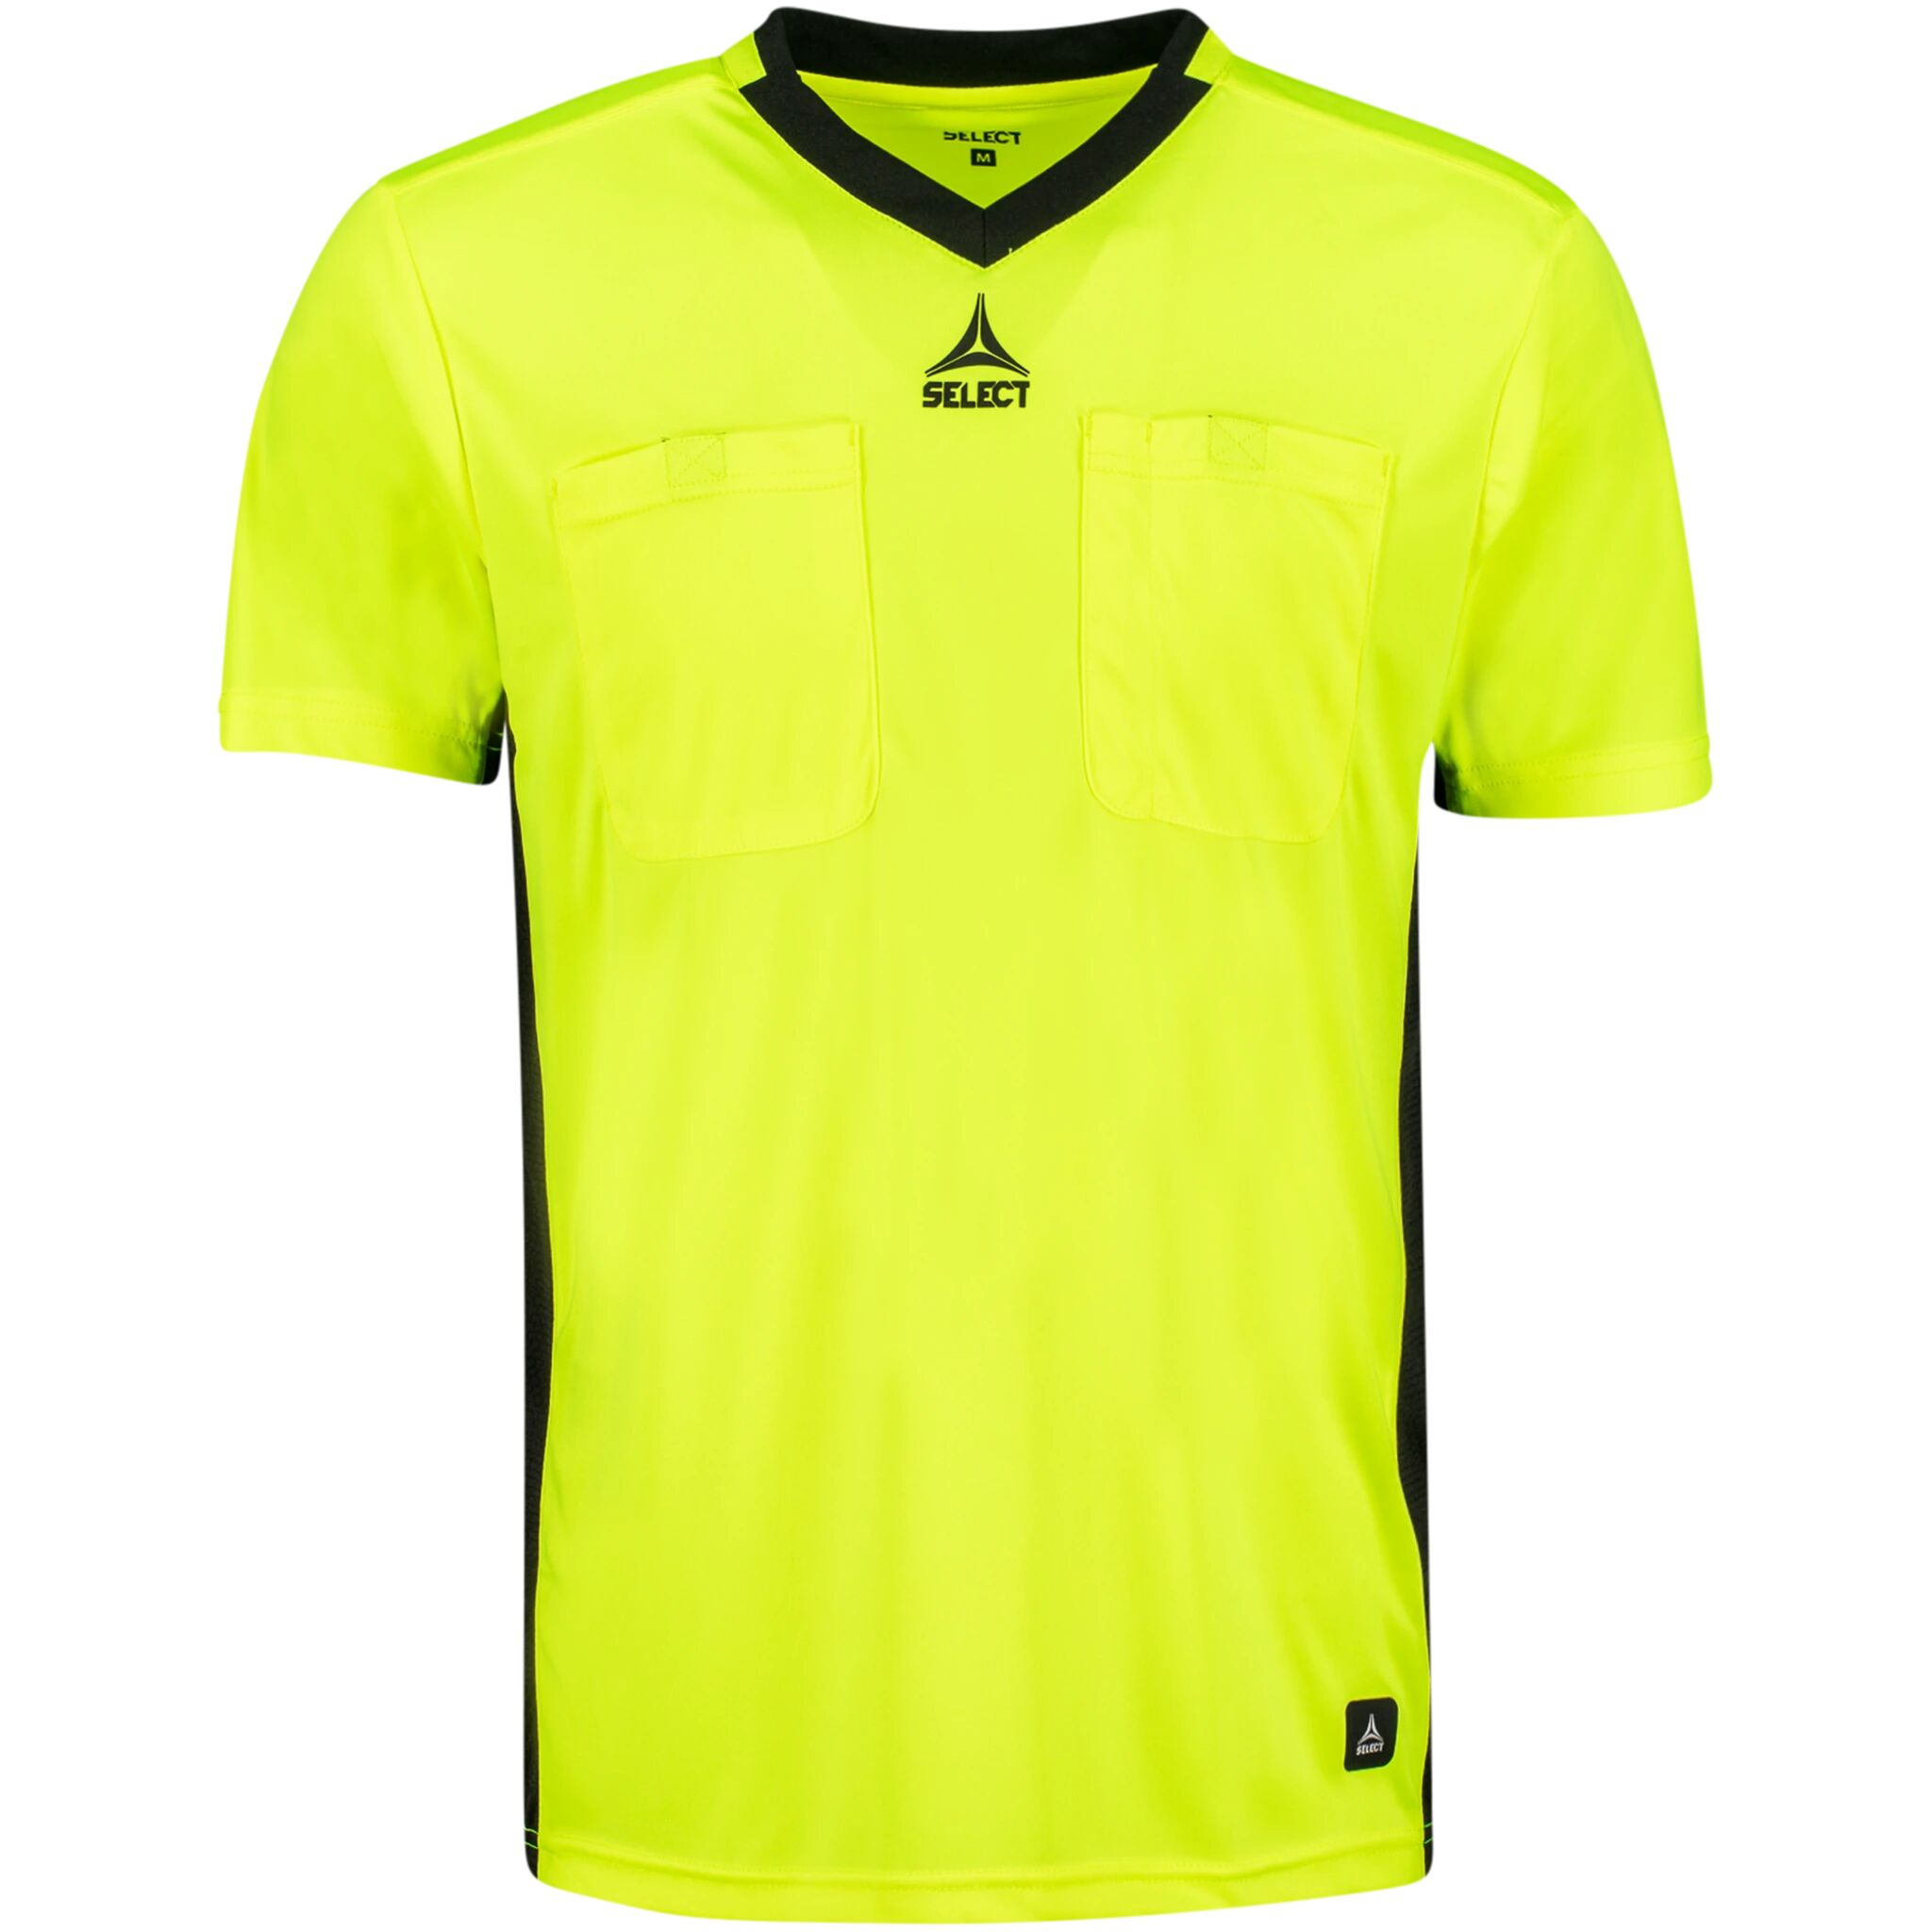 Select Referee shirt S/S v21, dommerdrakt senior M Yellow/Black